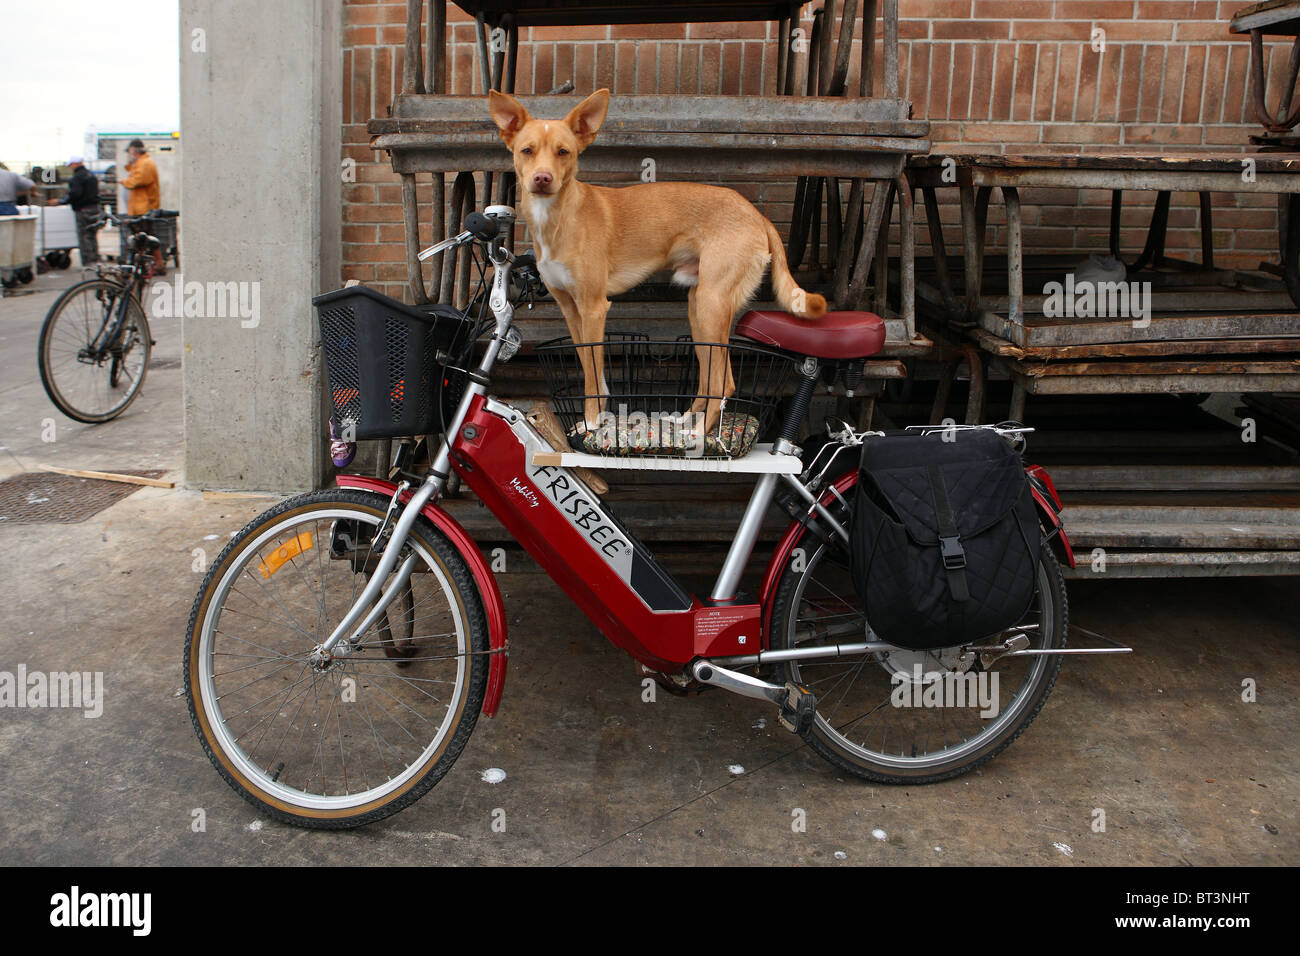 Perro, a bordo de una motocicleta Foto de stock